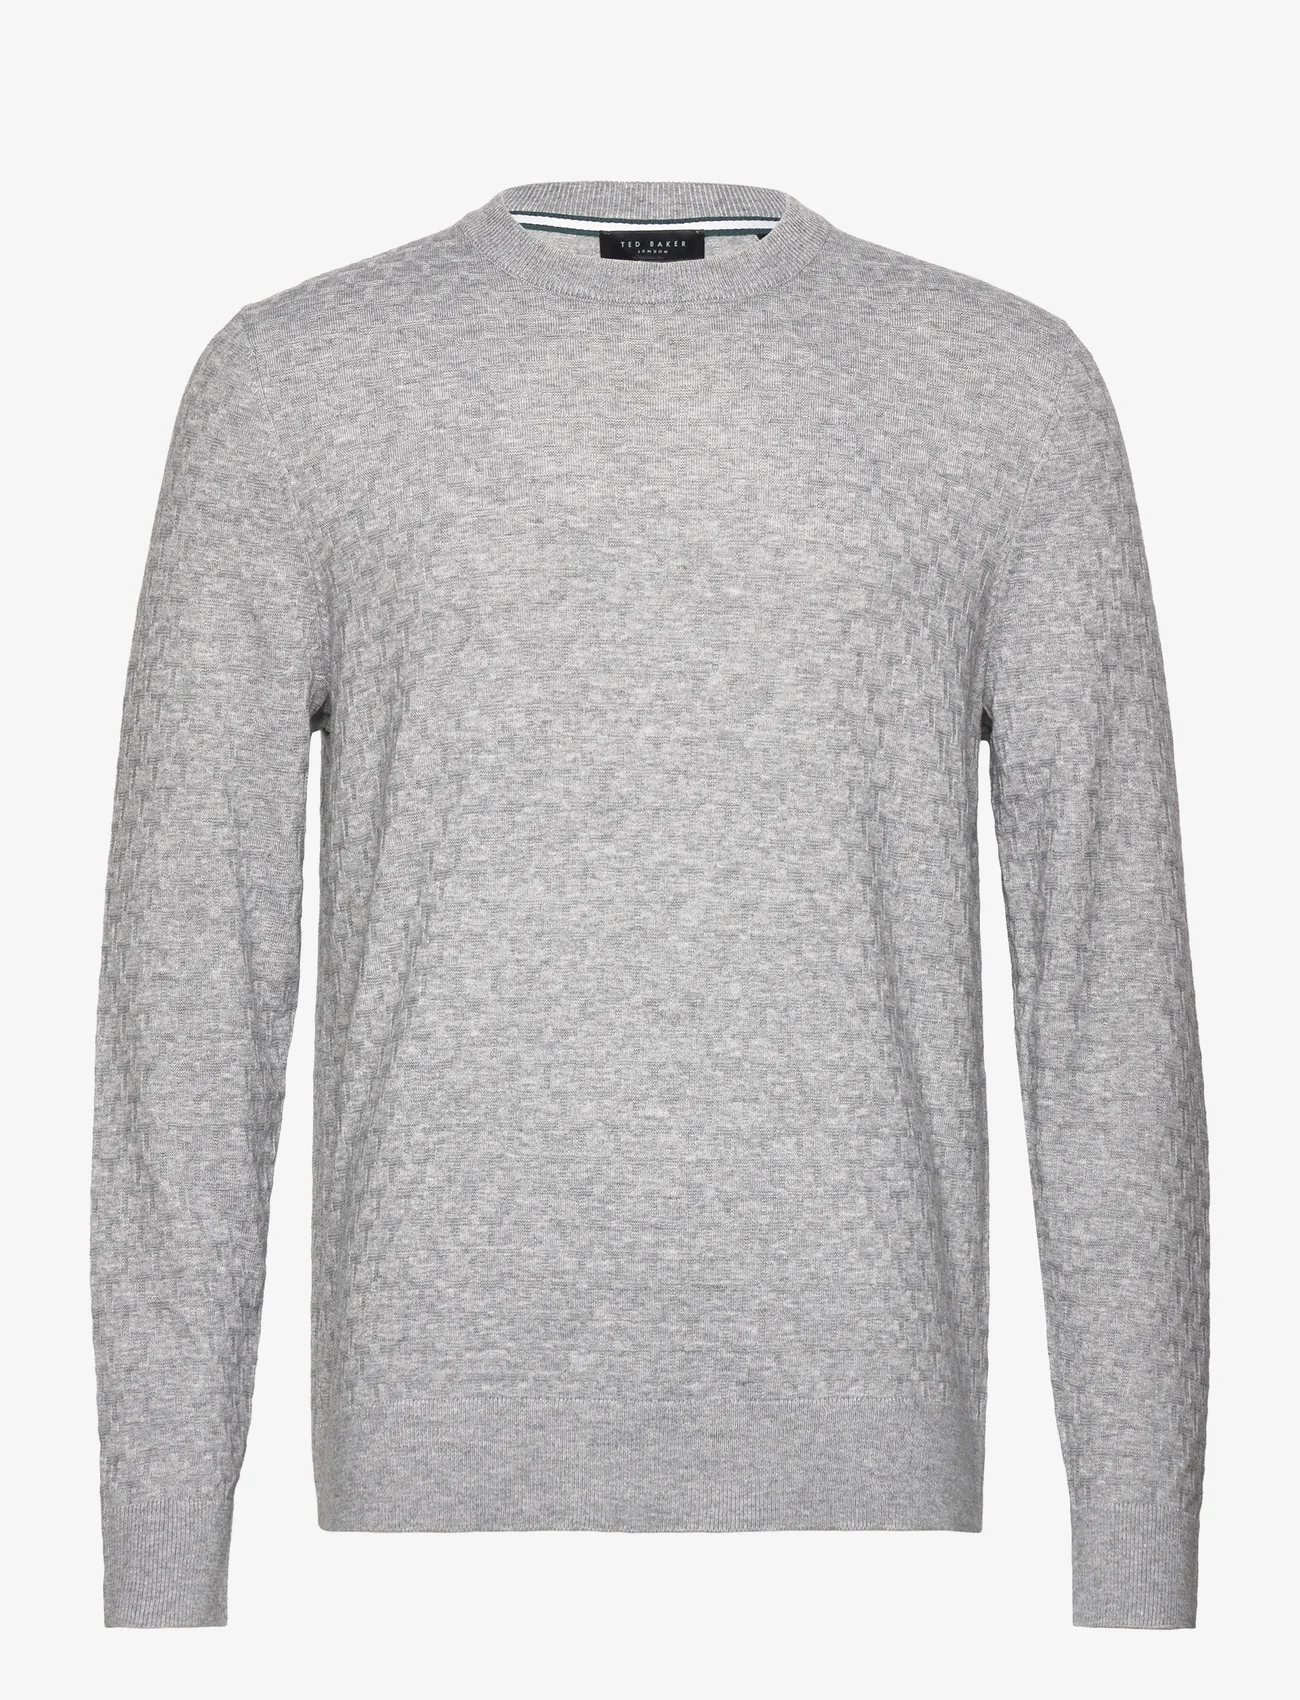 Ted Baker London - LOUNG - megztinis su apvalios formos apykakle - 05 grey marl - 0